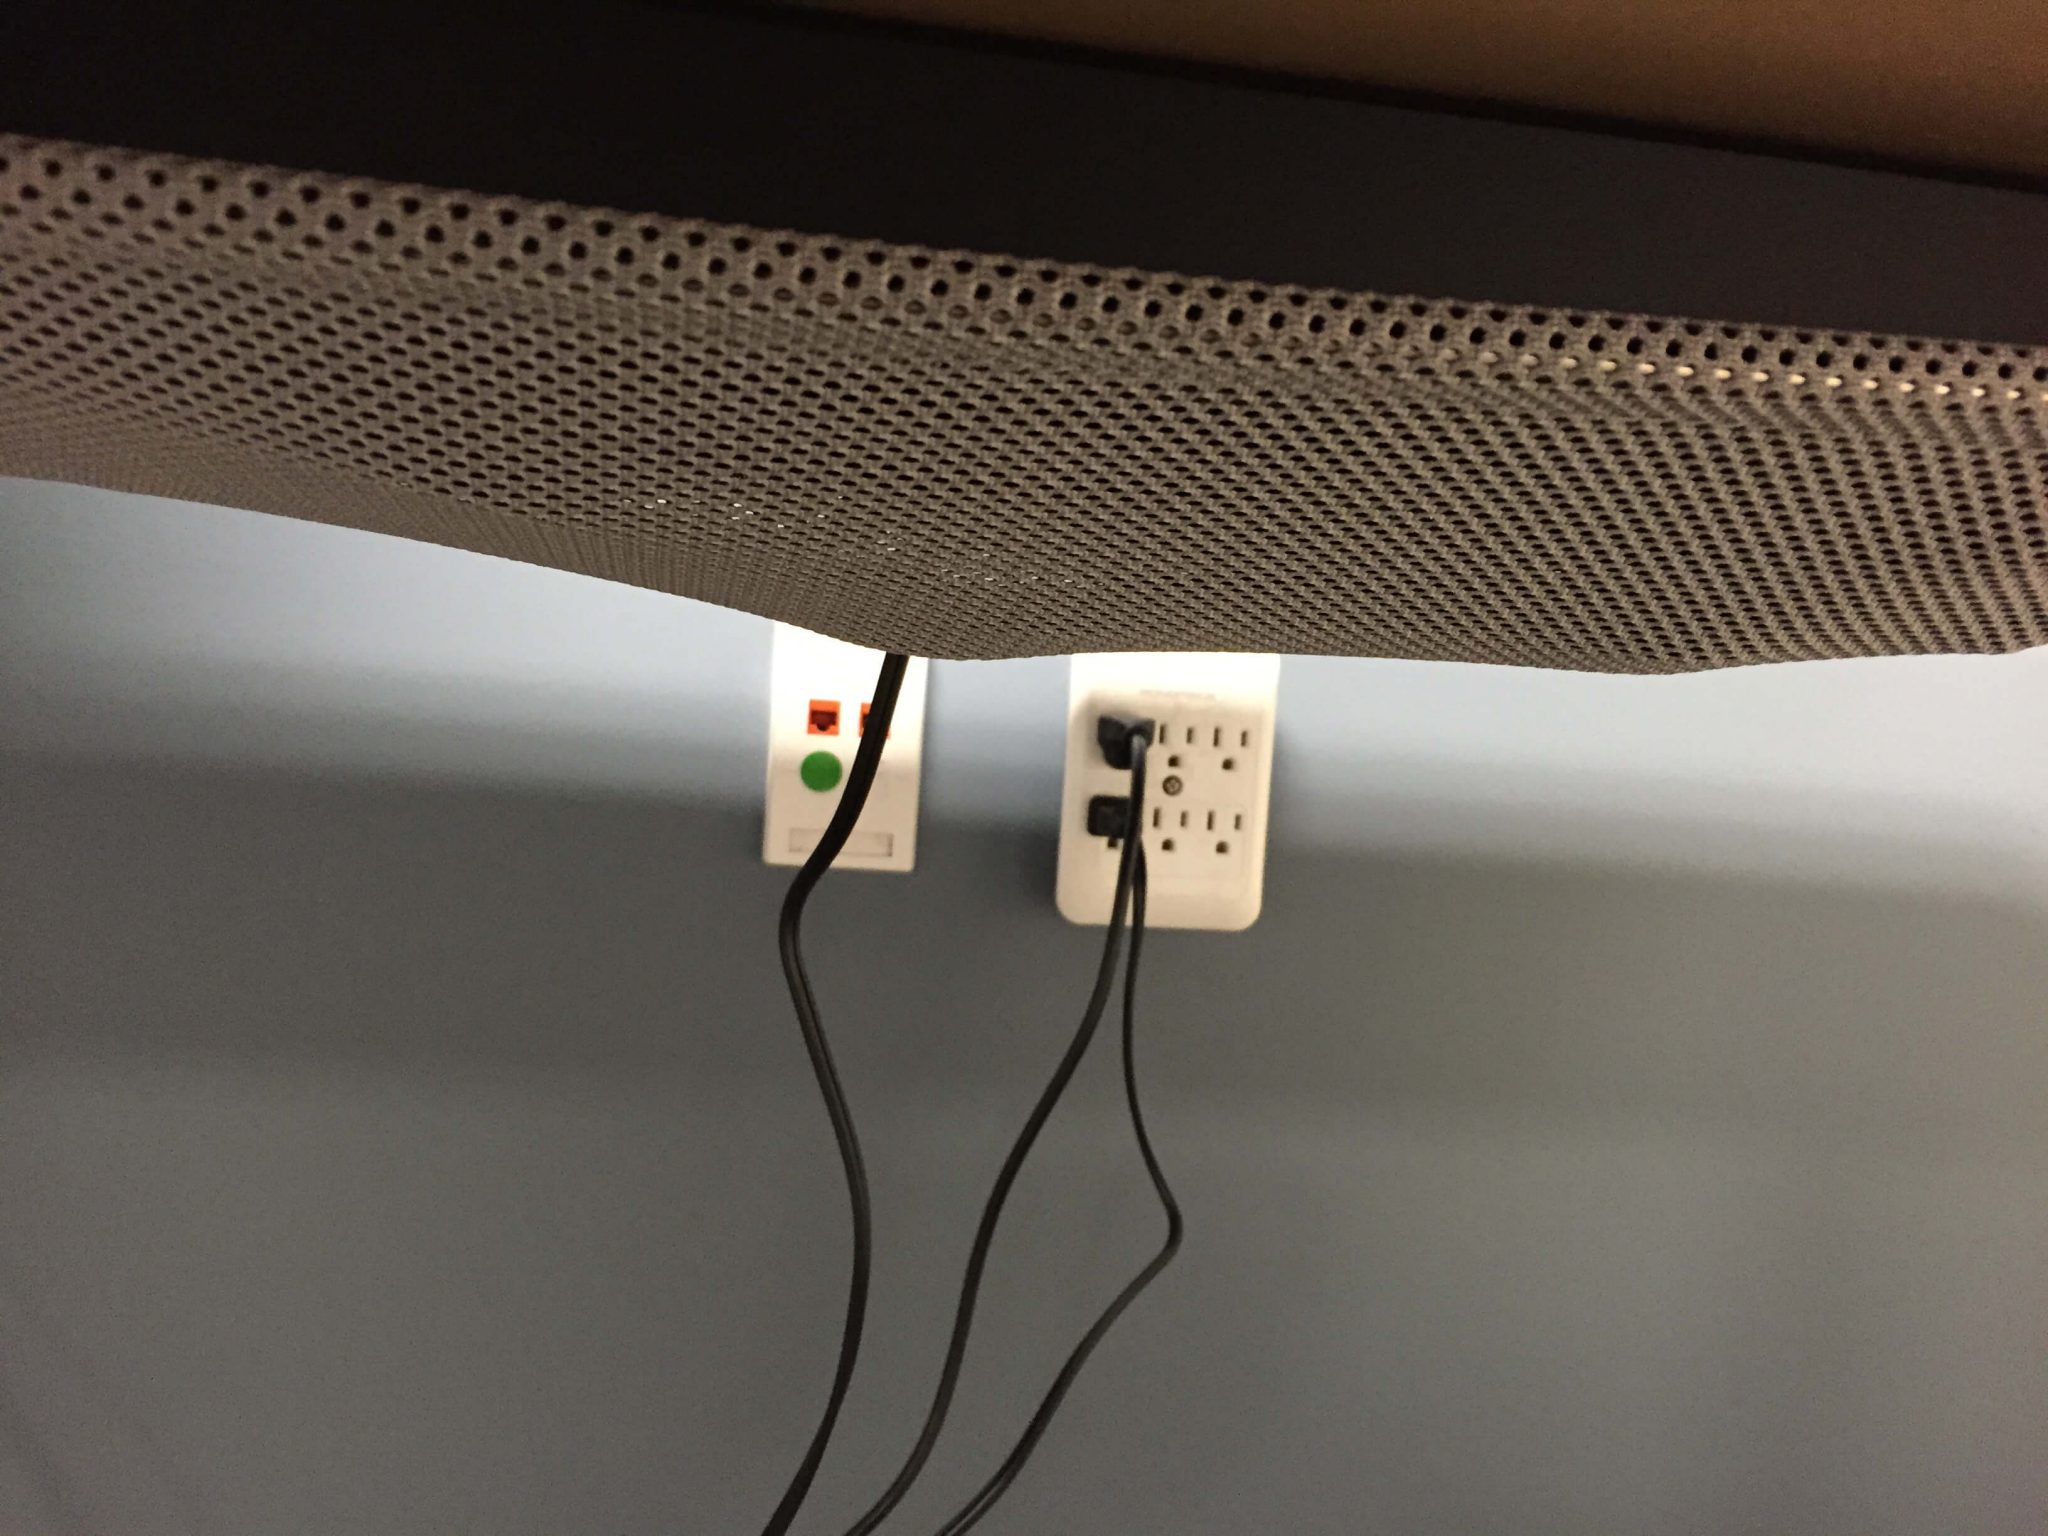 The desk net for cords